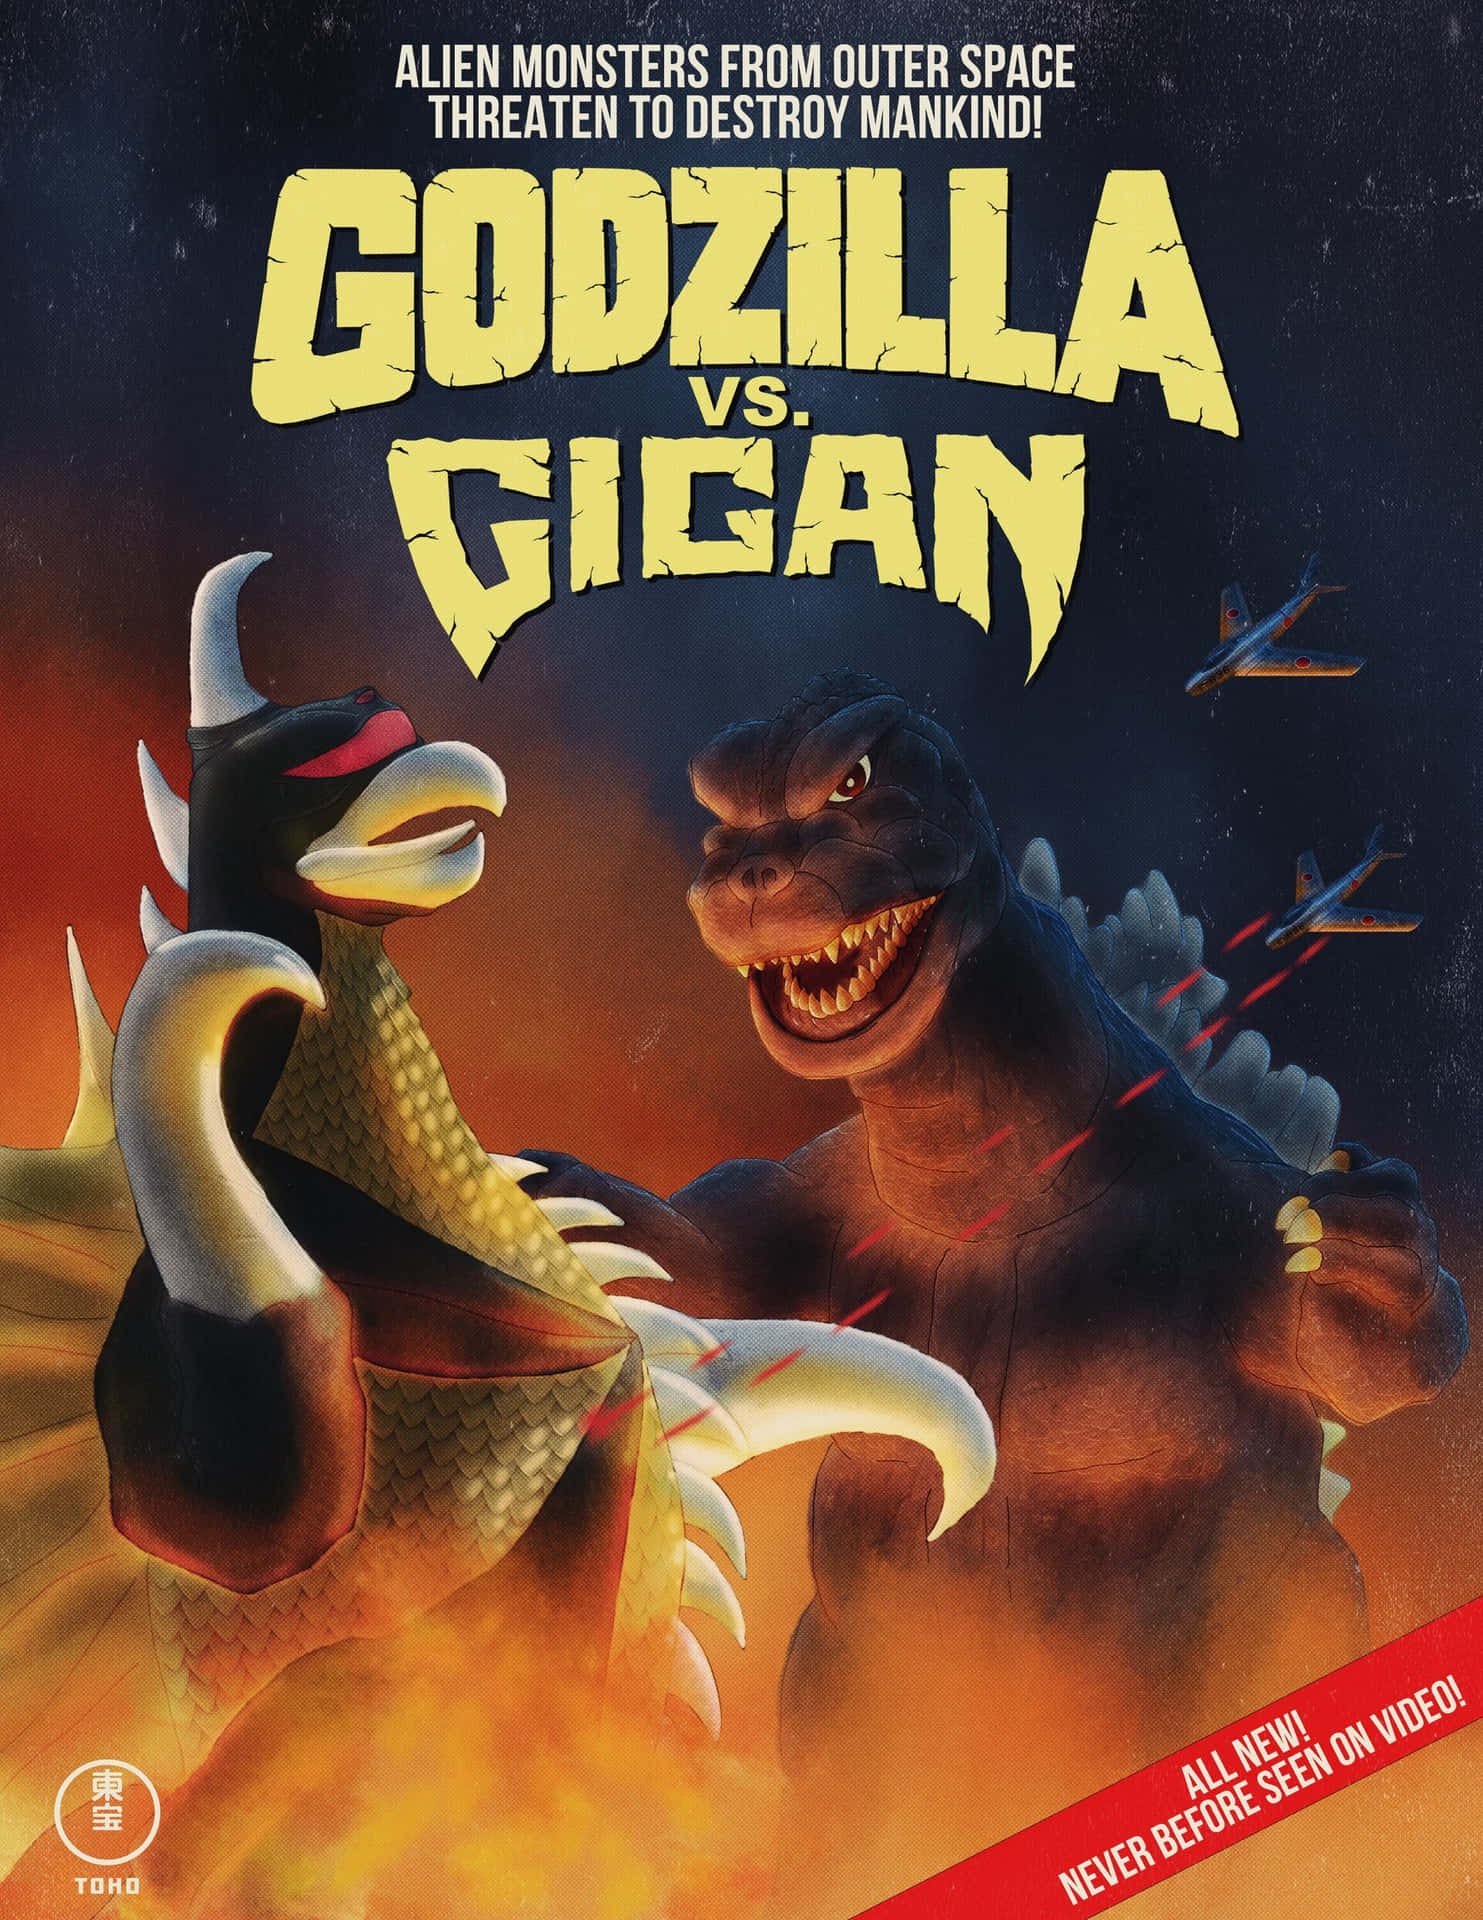 Godzilla battles Gigan in a thrilling showdown Wallpaper